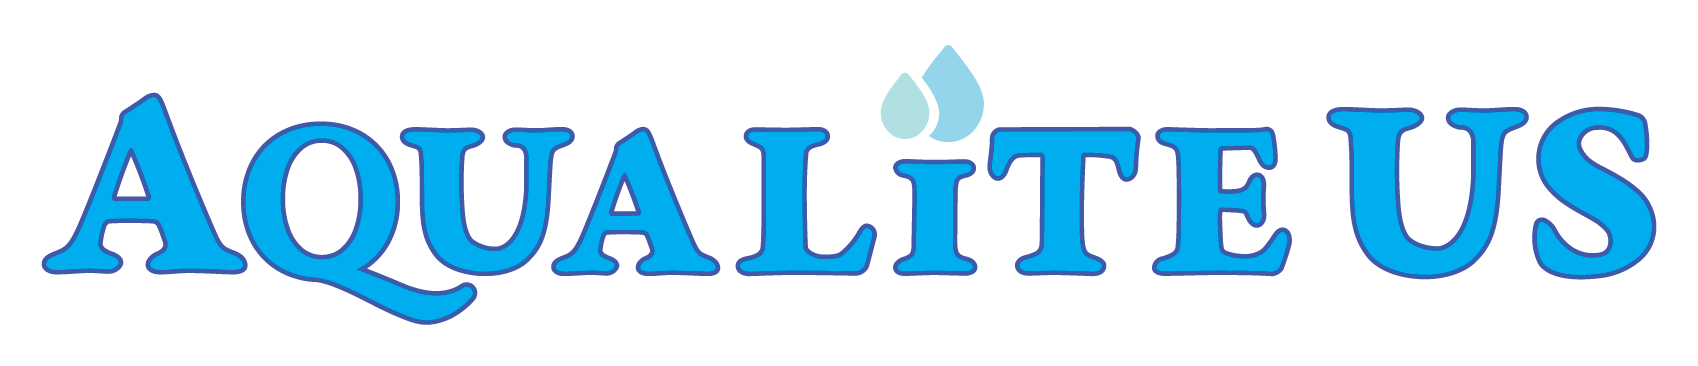 Aqualite US logo | Aqua Lite US